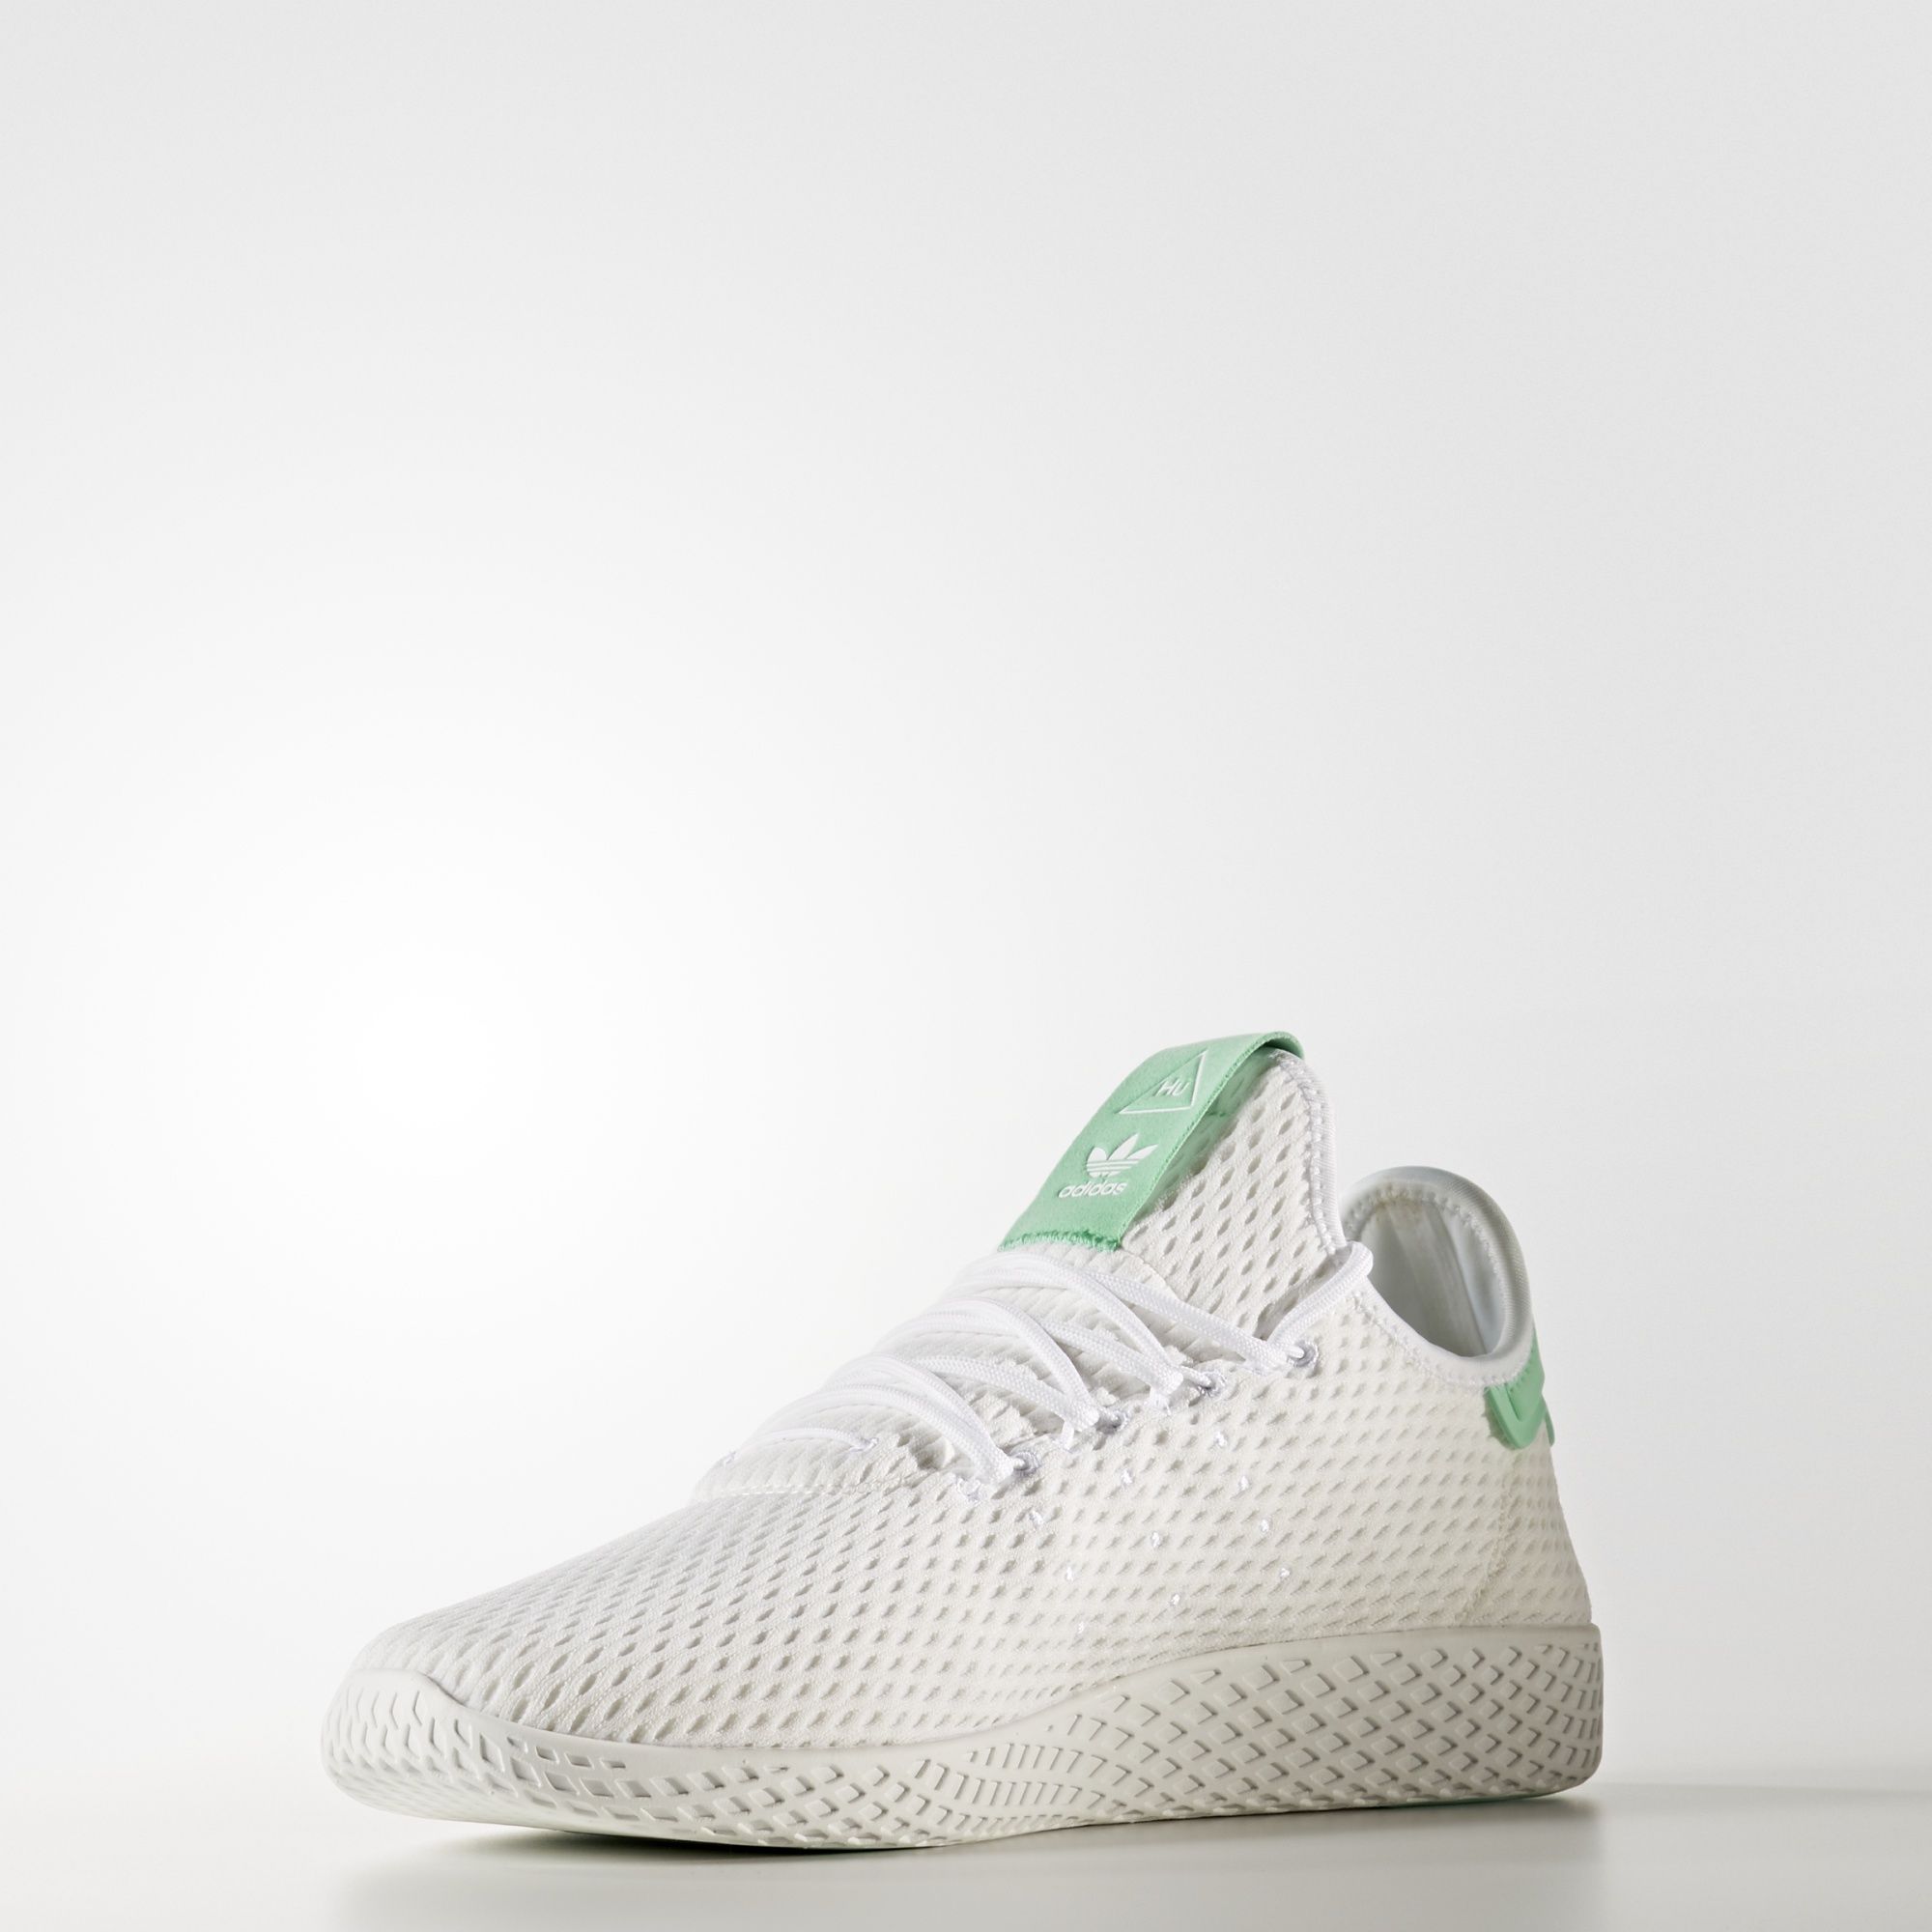 BY8717 Pharrell Williams x adidas Tennis HU White Green Glow 2